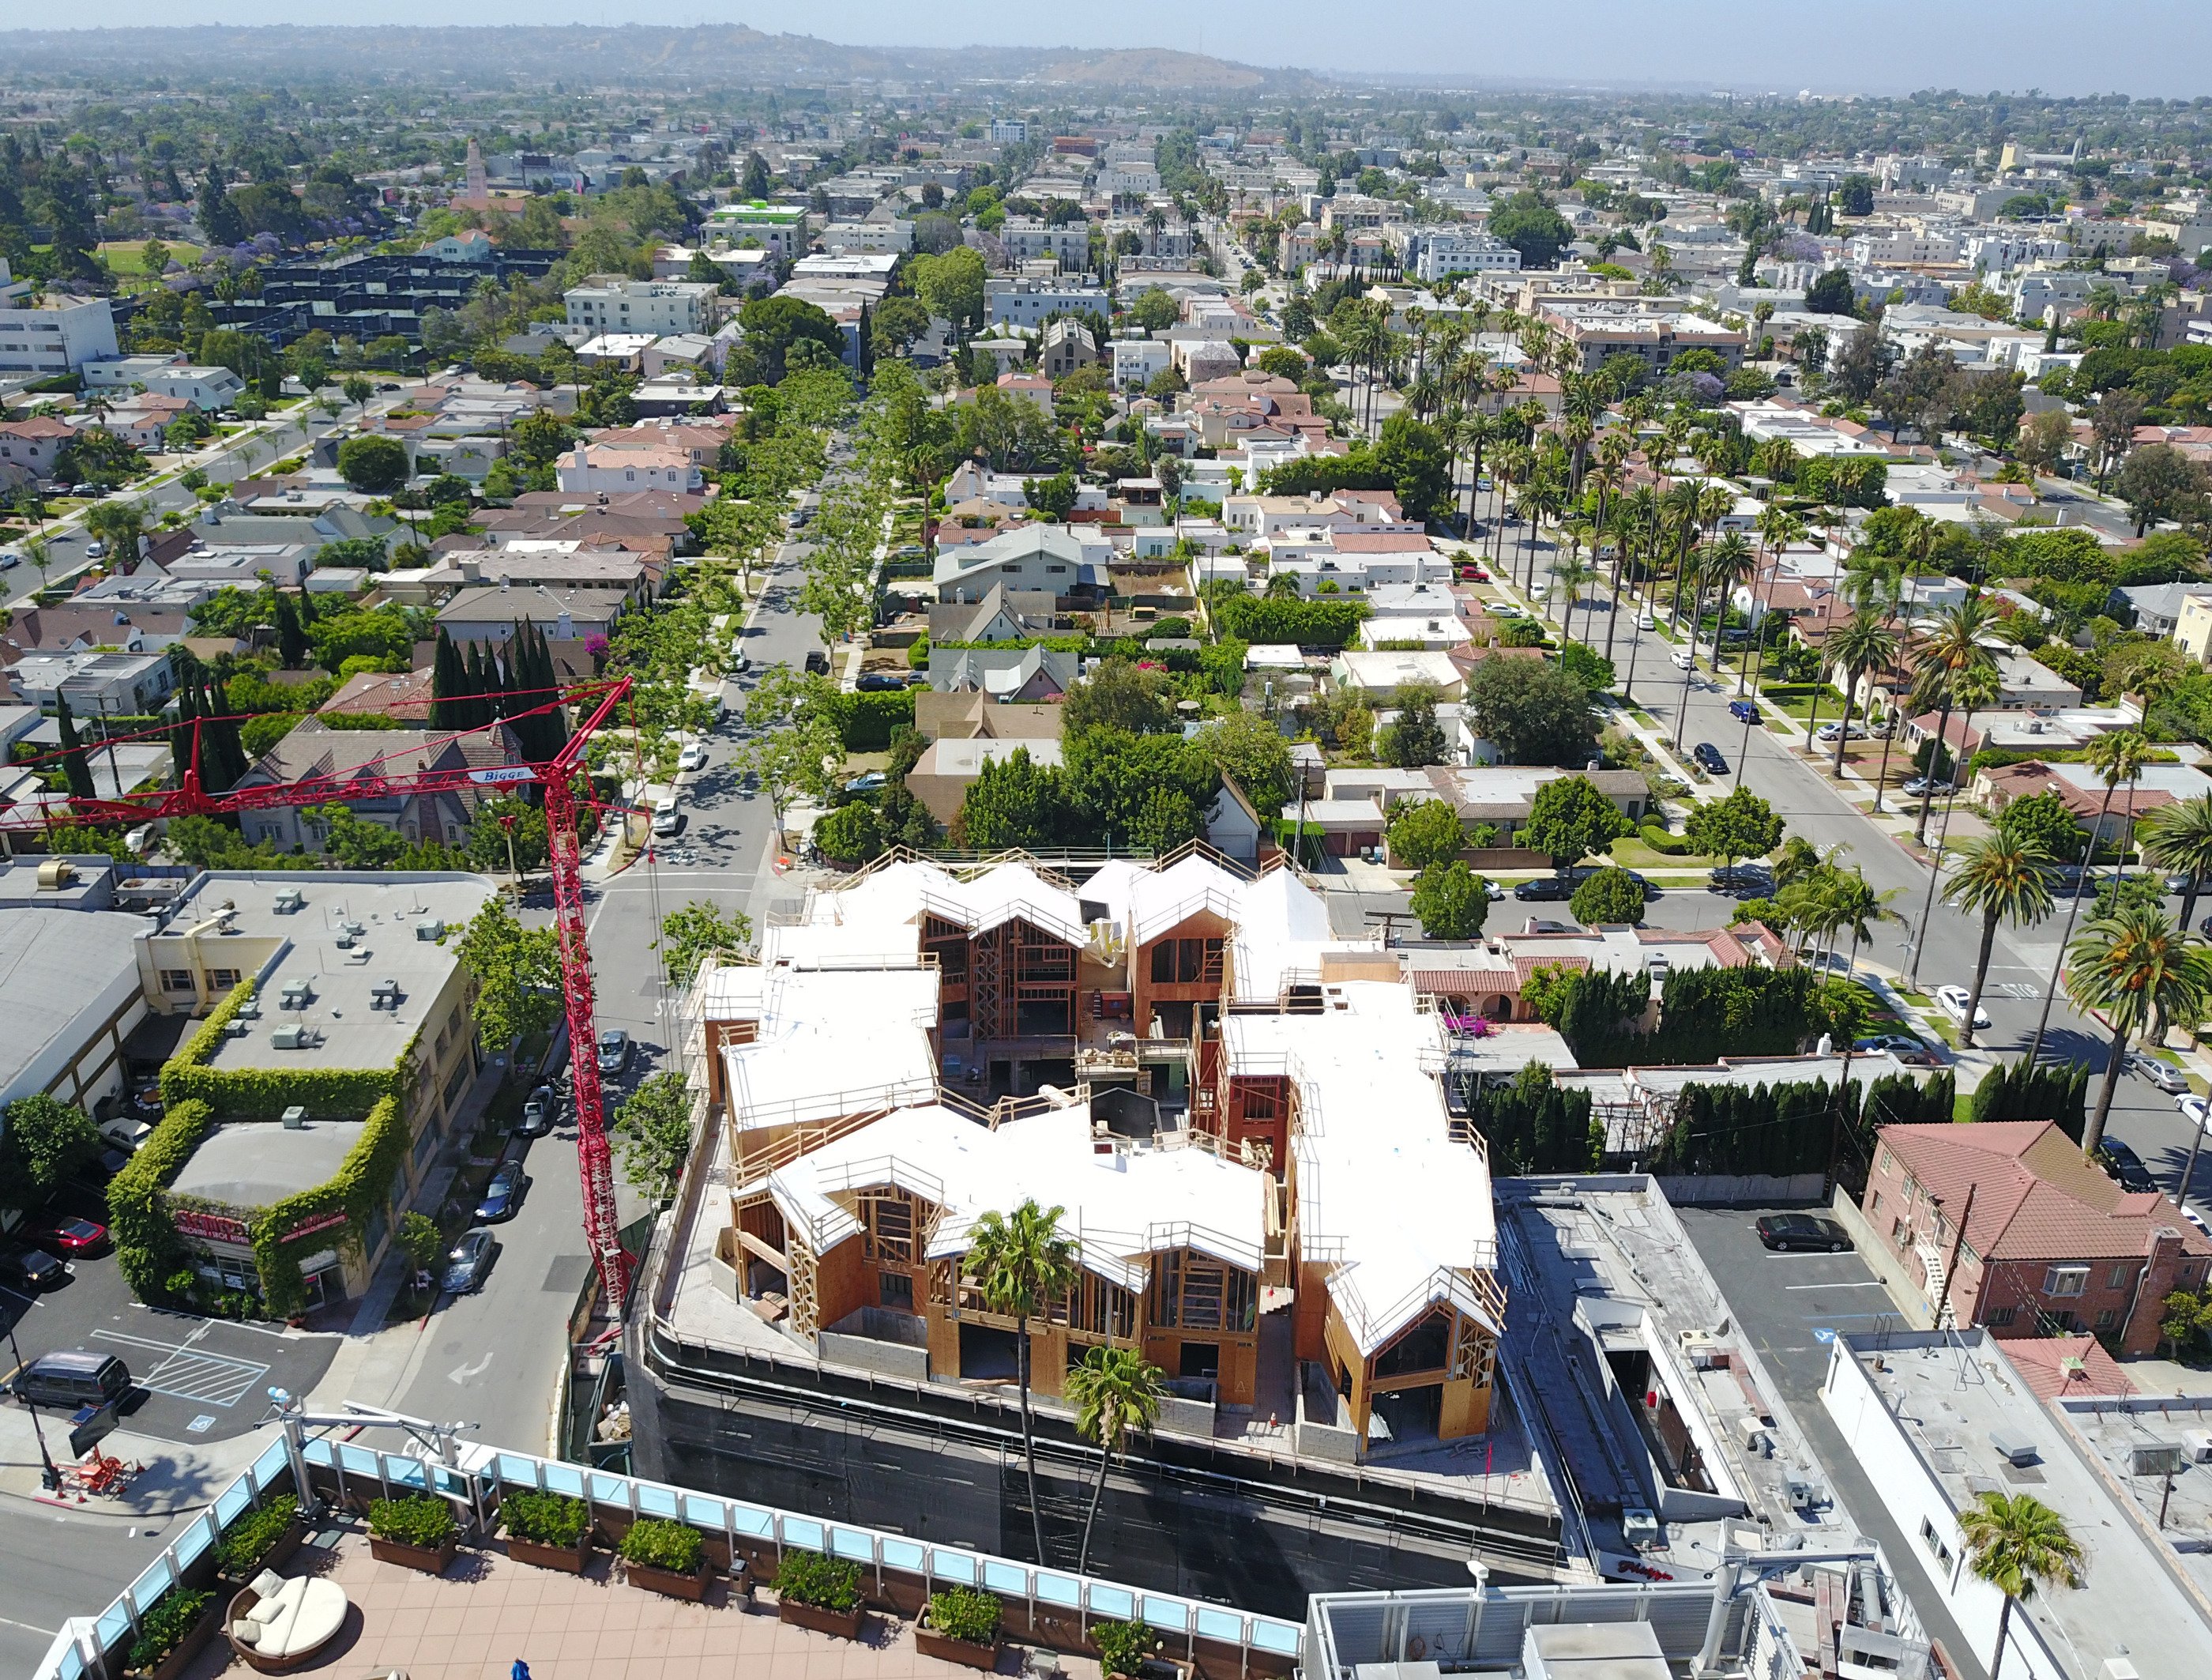 Топ села. GARDENHOUSE, США Мад. 6. GARDENHOUSE / Mad Architects. Beverly Hills Top down view. Pictures Top Village.